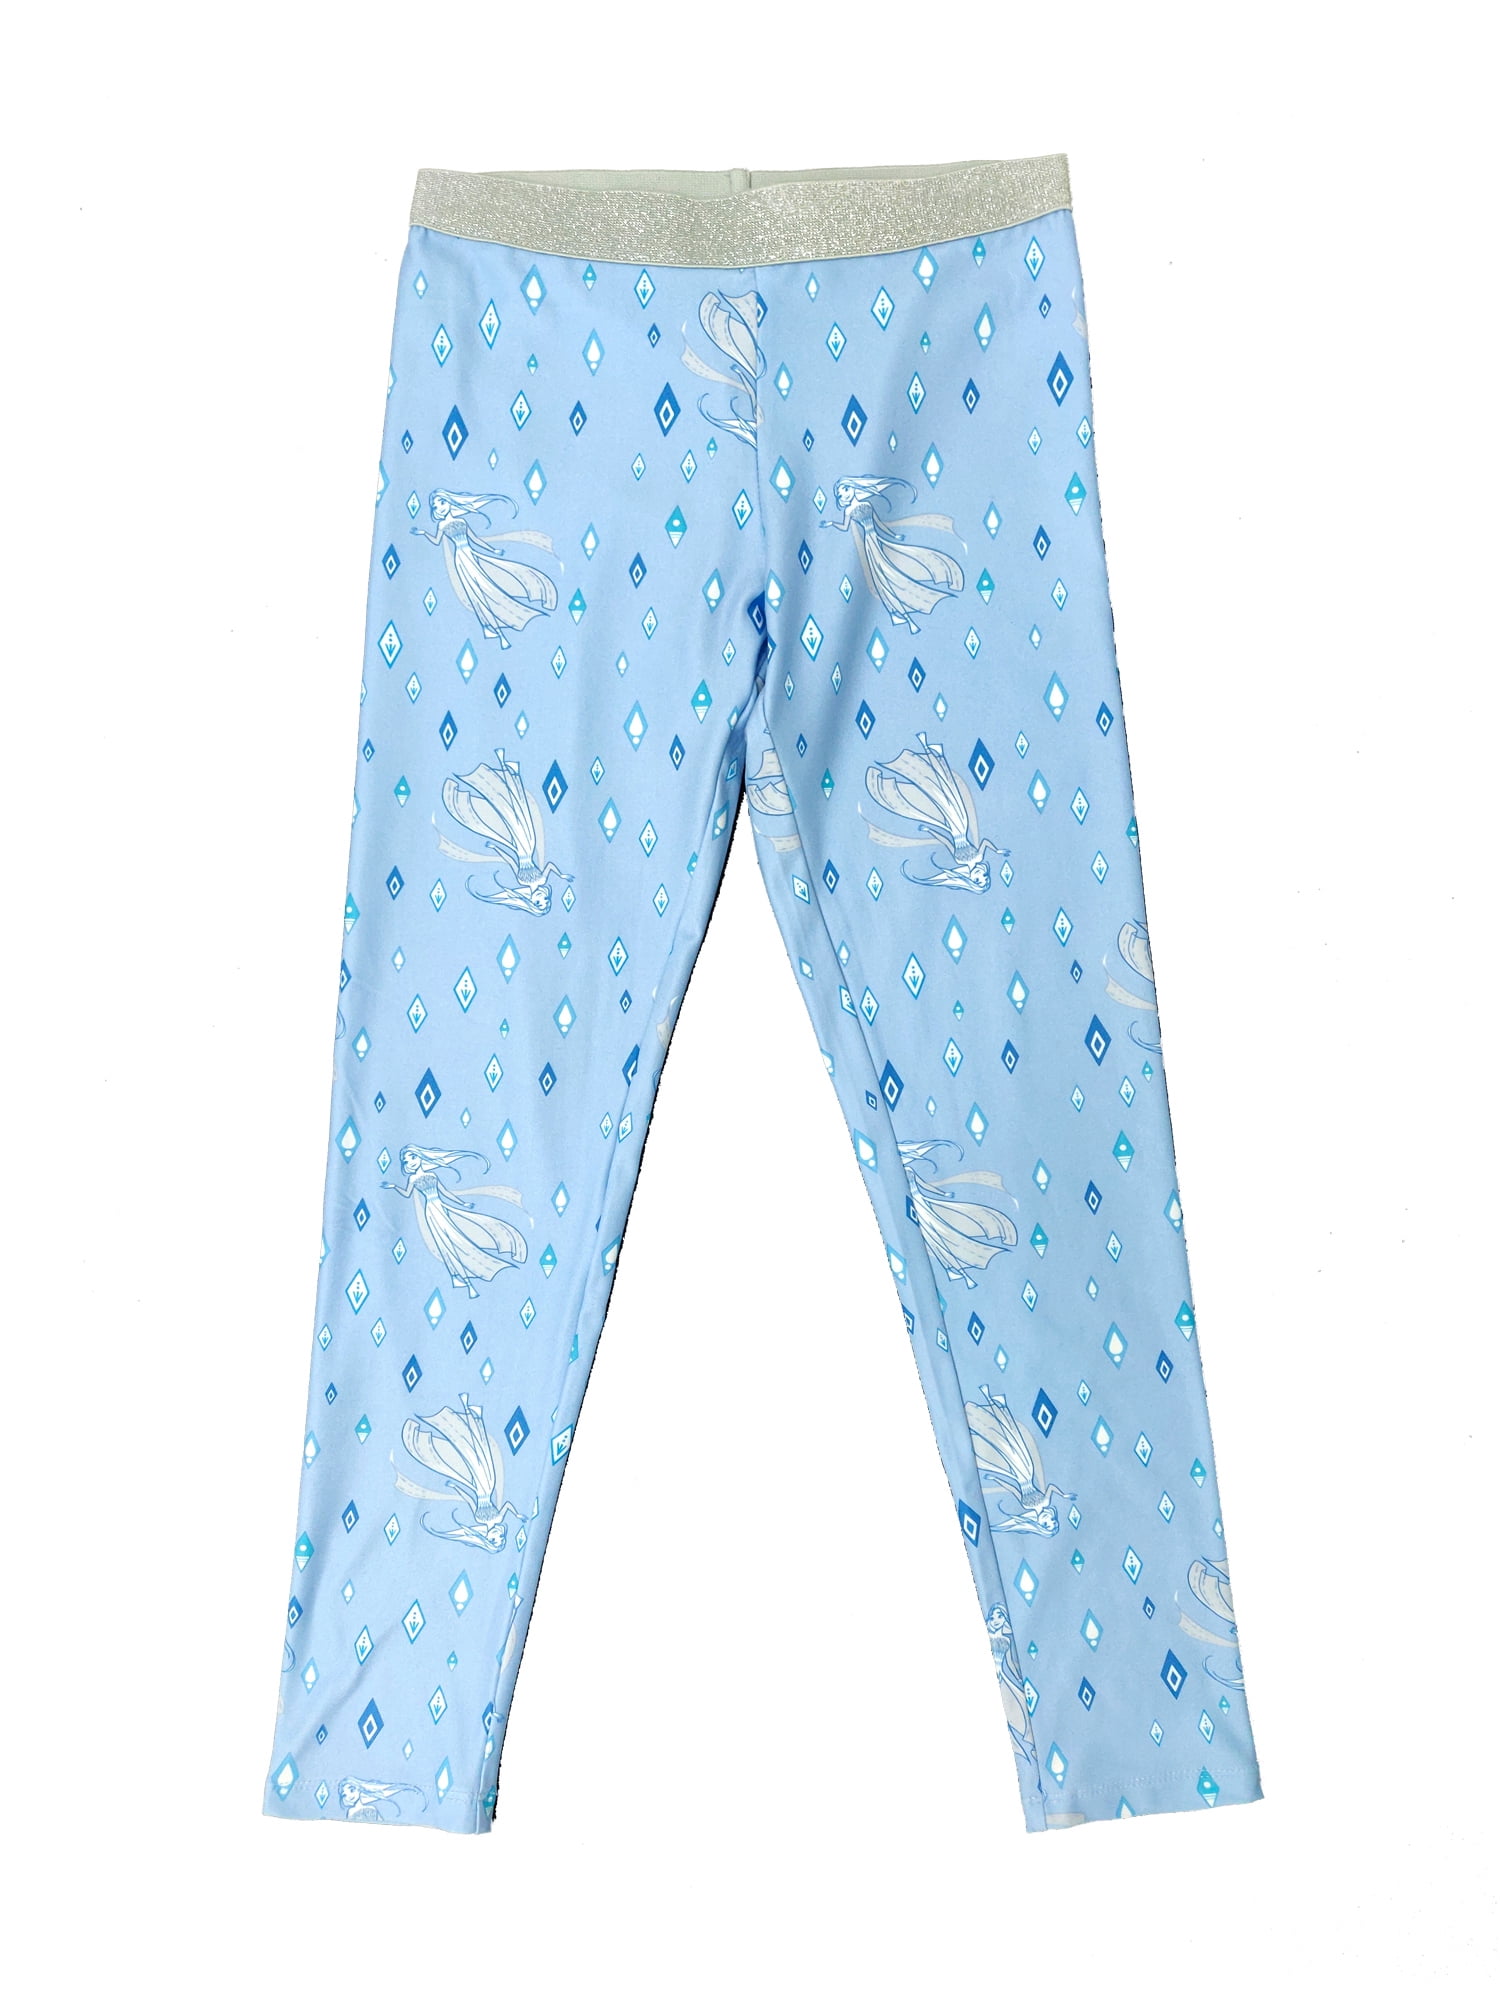 NEW Disney Frozen Leggings Size 4T Fleece Lined Toddler Pants Elsa Blue Pants 